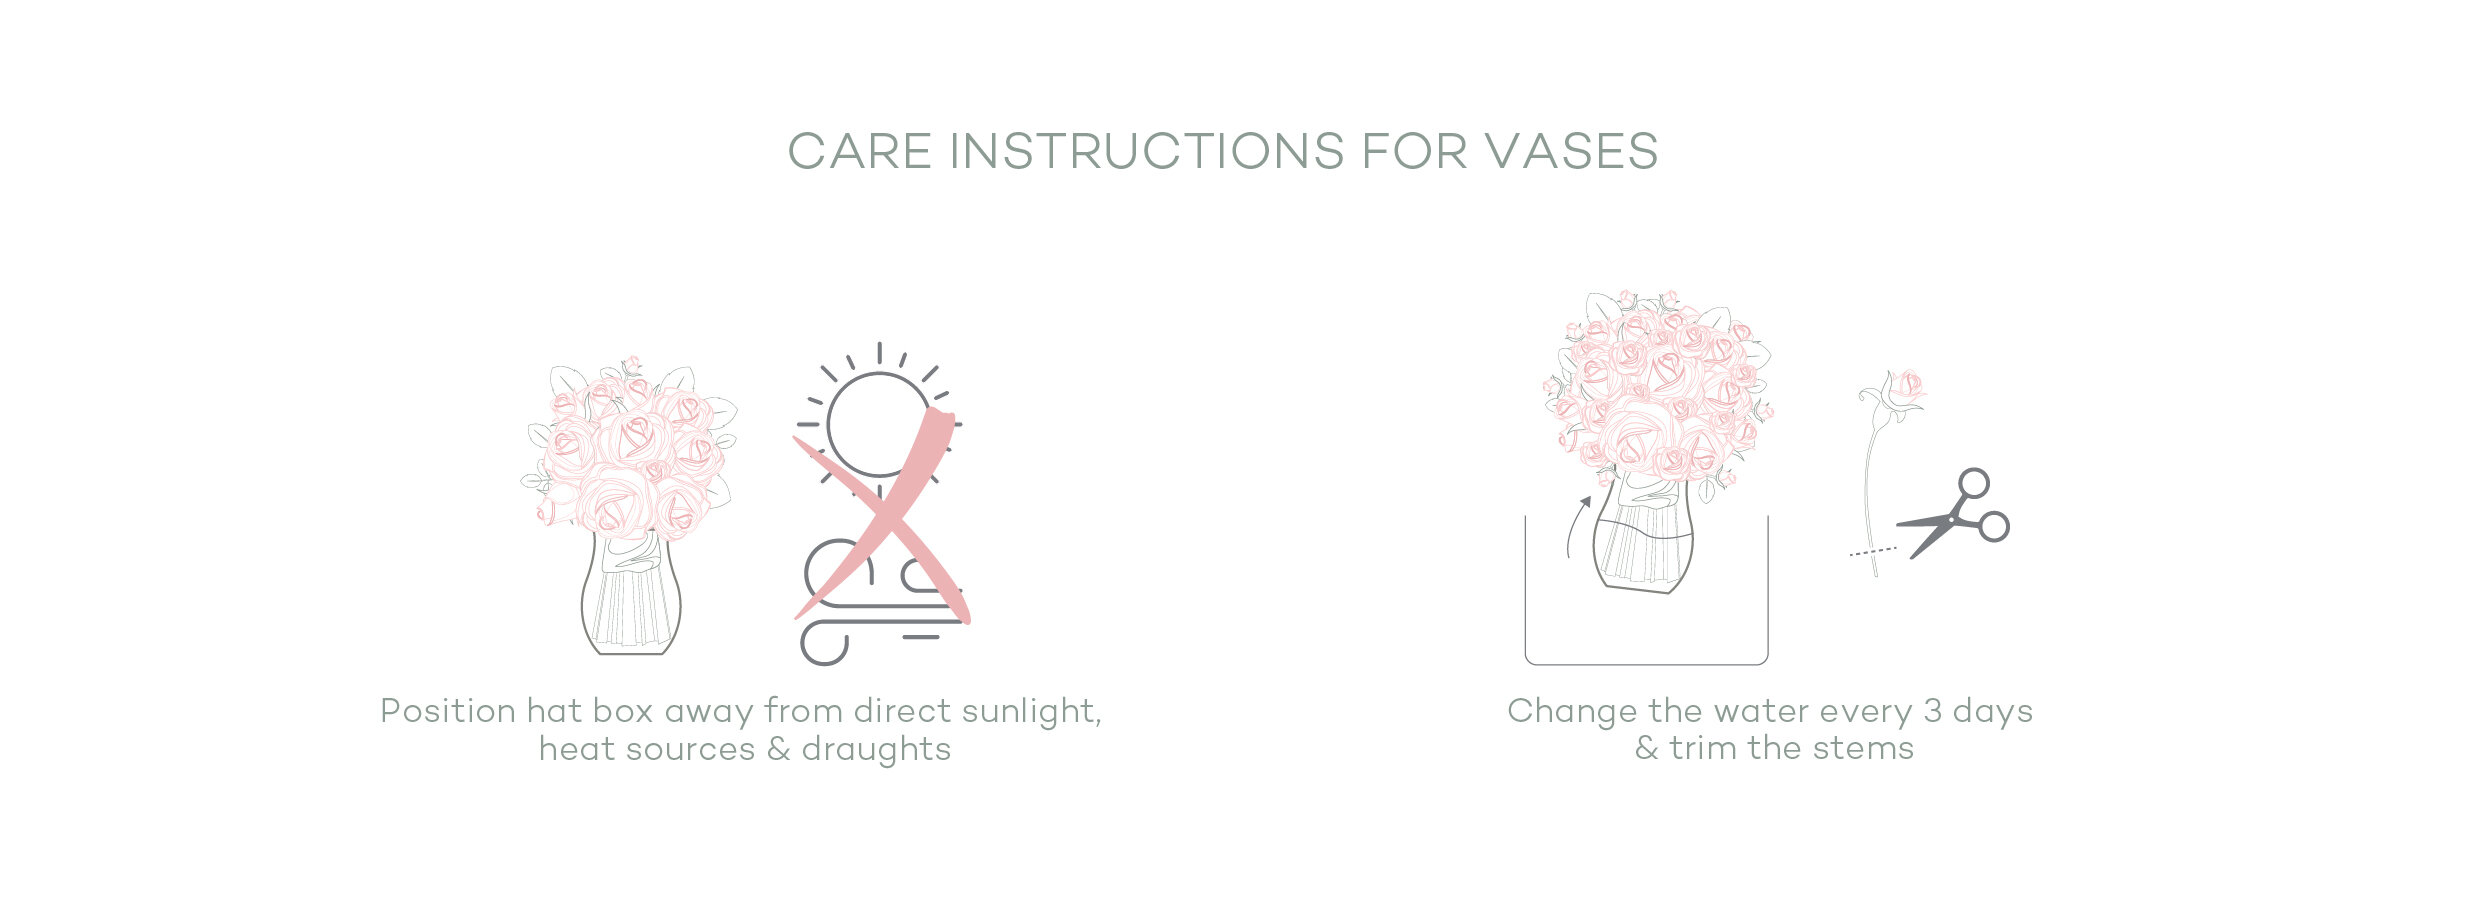 Care Instructions for Vases-01.jpg